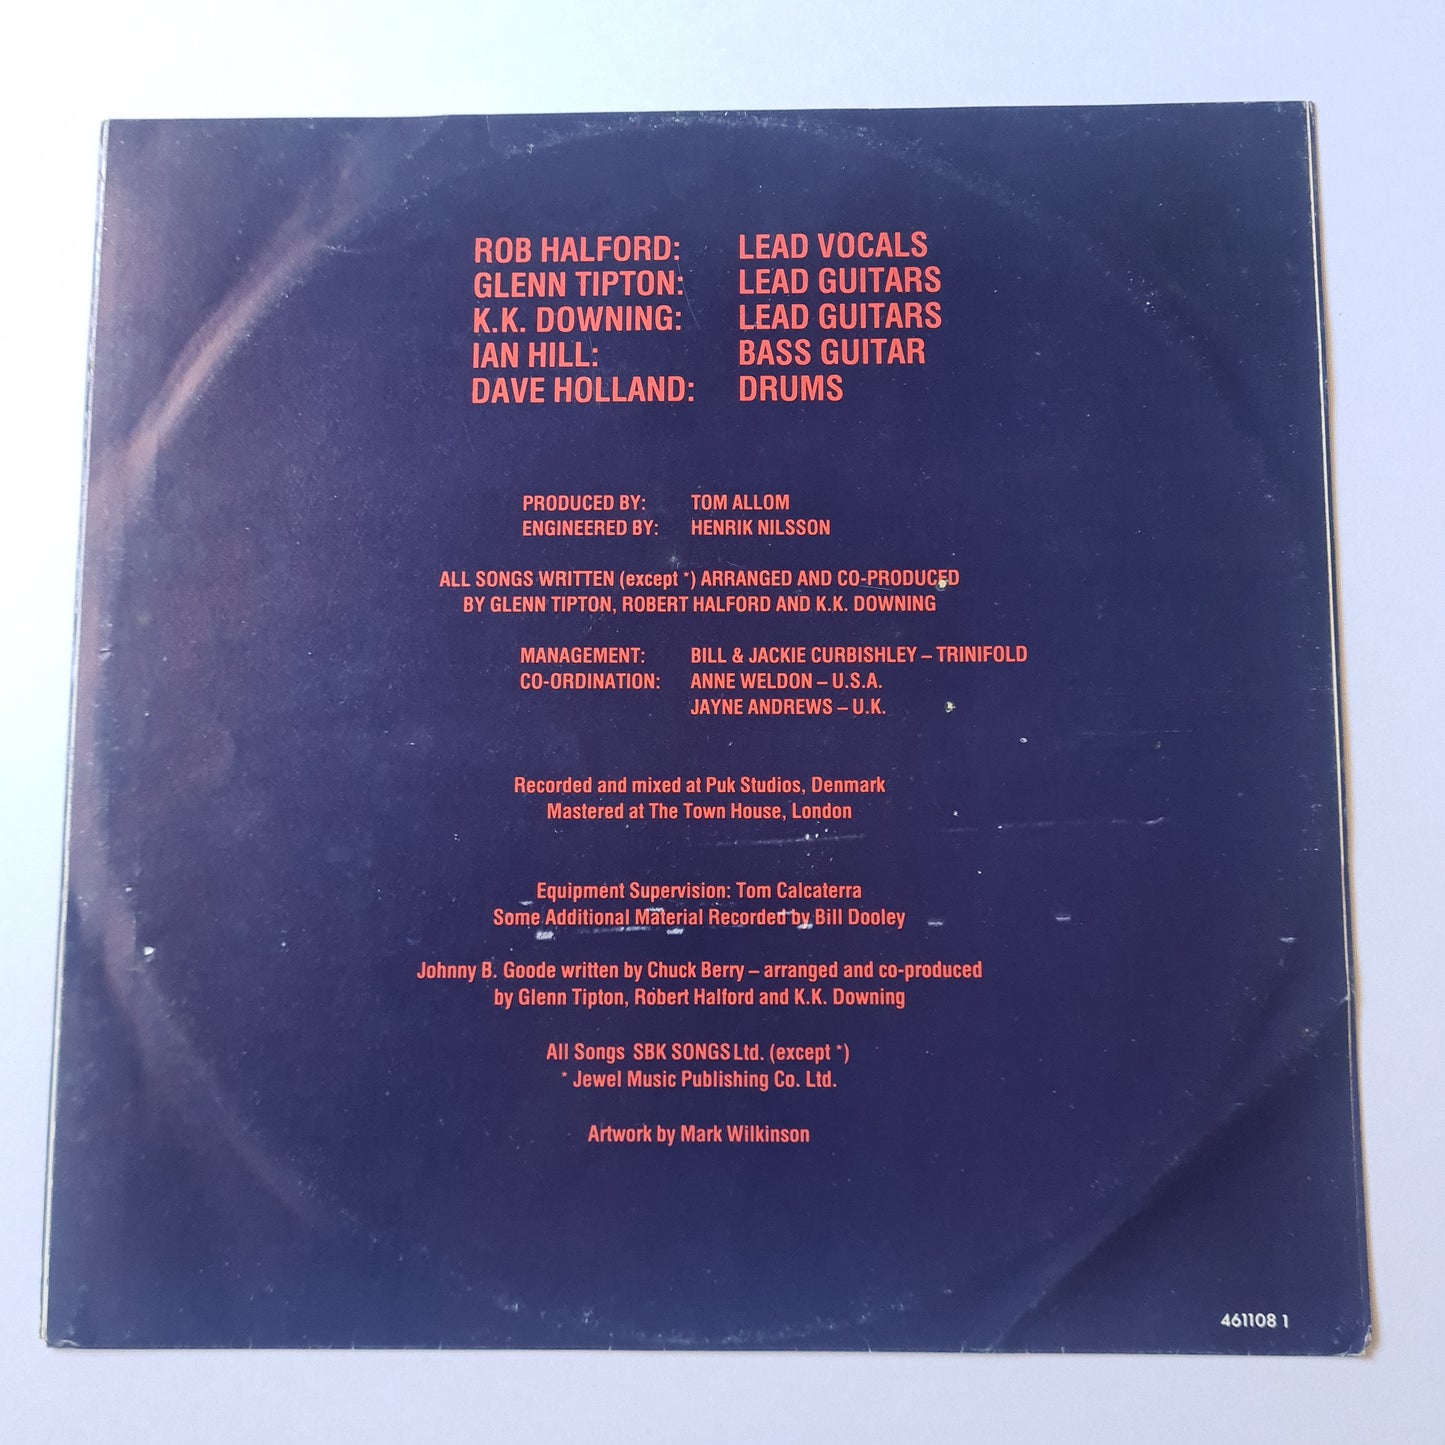 Judas Priest – Ram It Down - 1988 - Vinyl Record